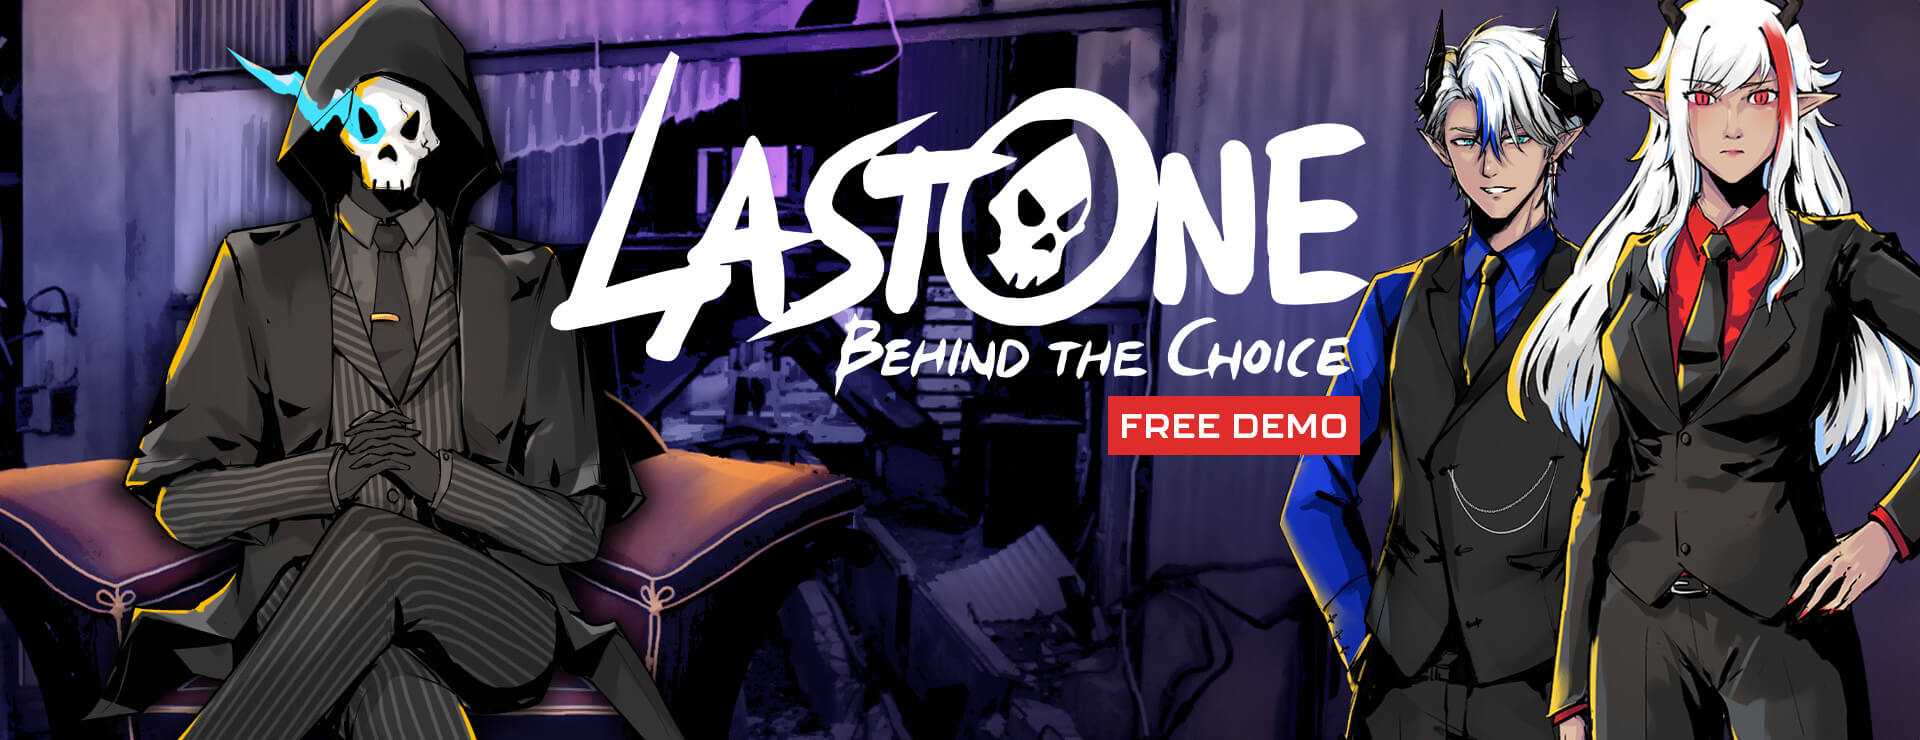 Lastone: Behind the Choice Demo - Novela Visual Juego